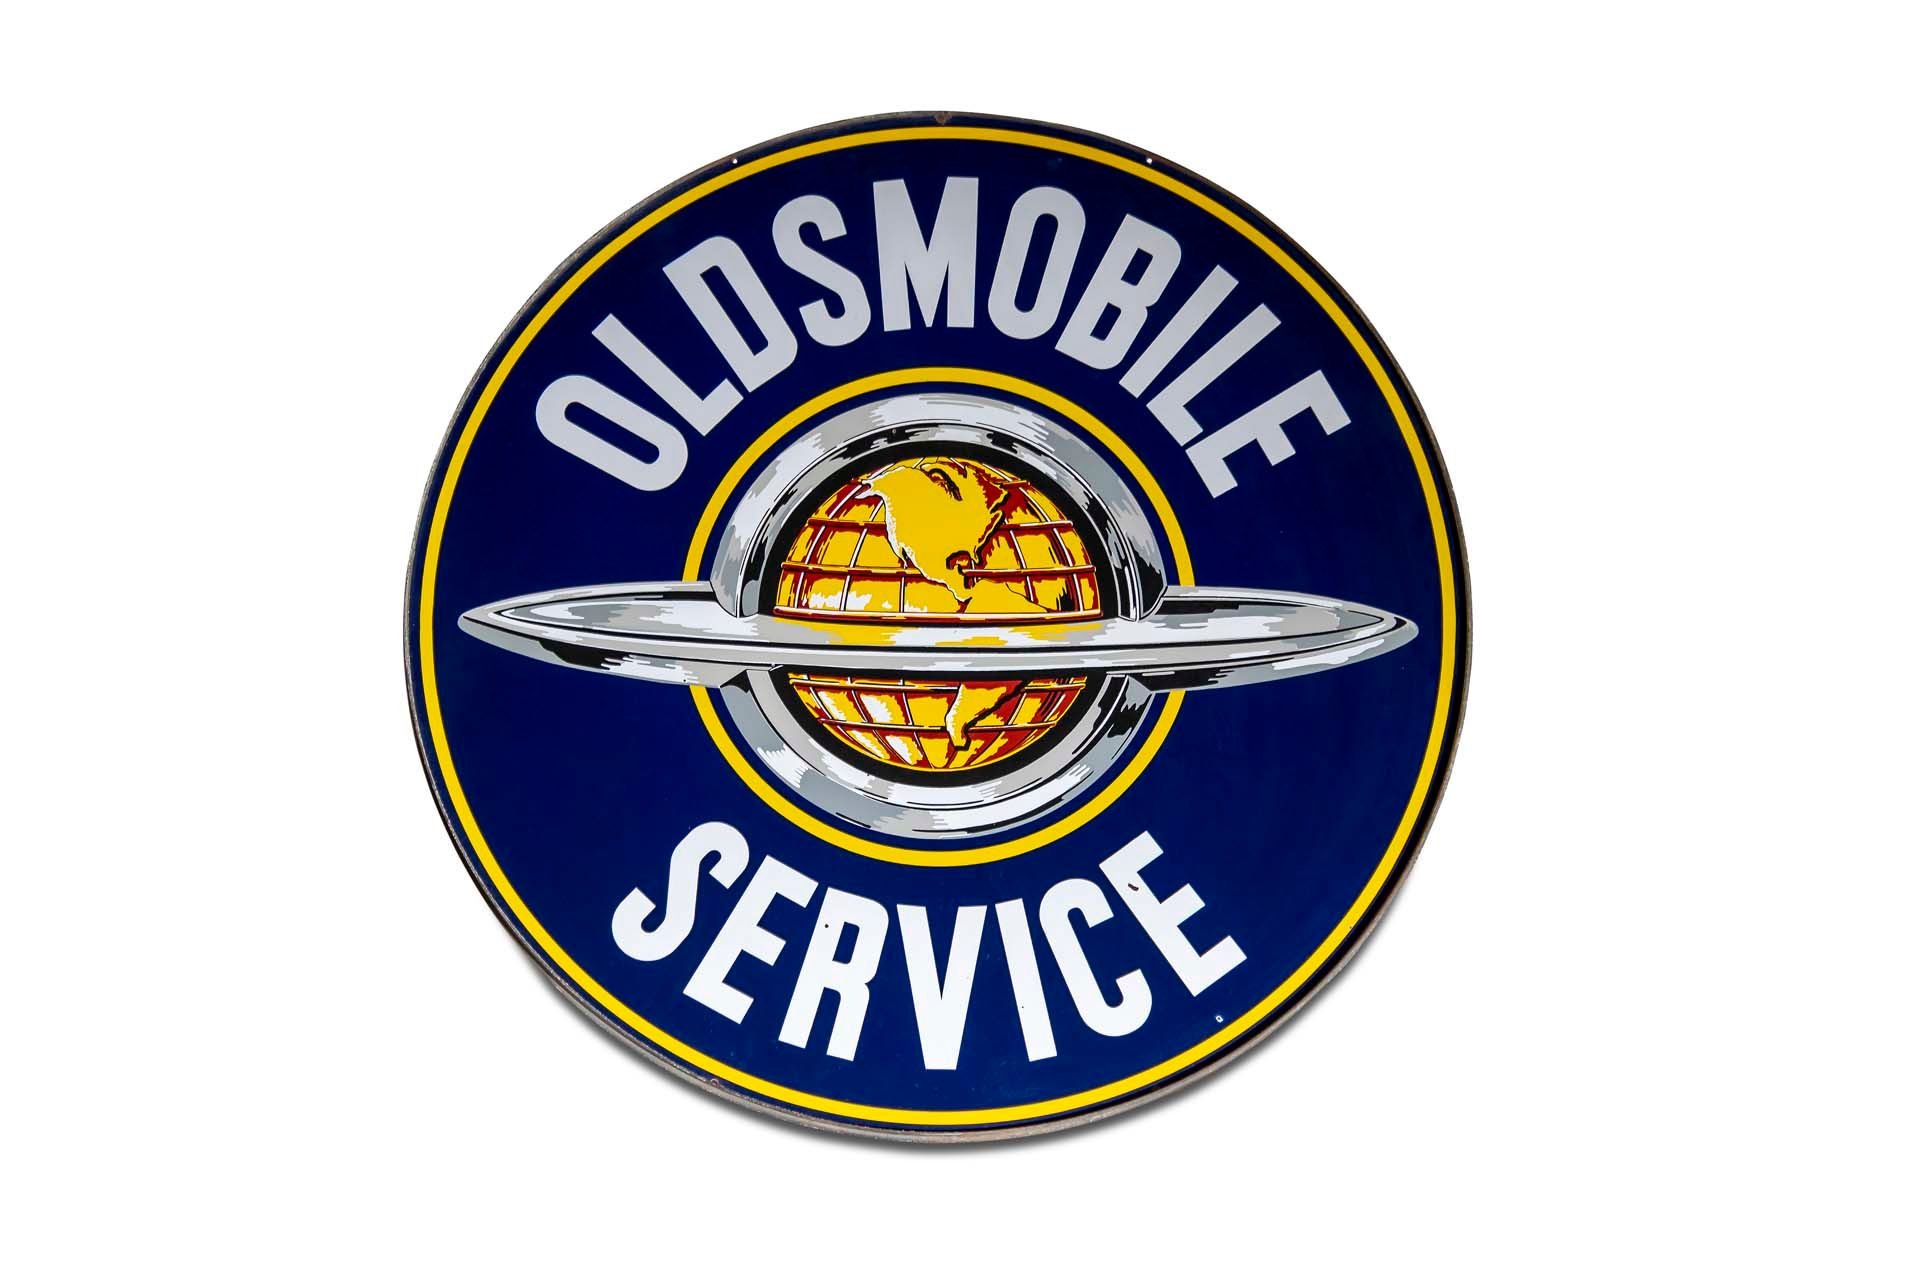 For Sale Large 'Oldsmobile Service' Porcelain Sign, Double-sided, Metal Frame and Brackets